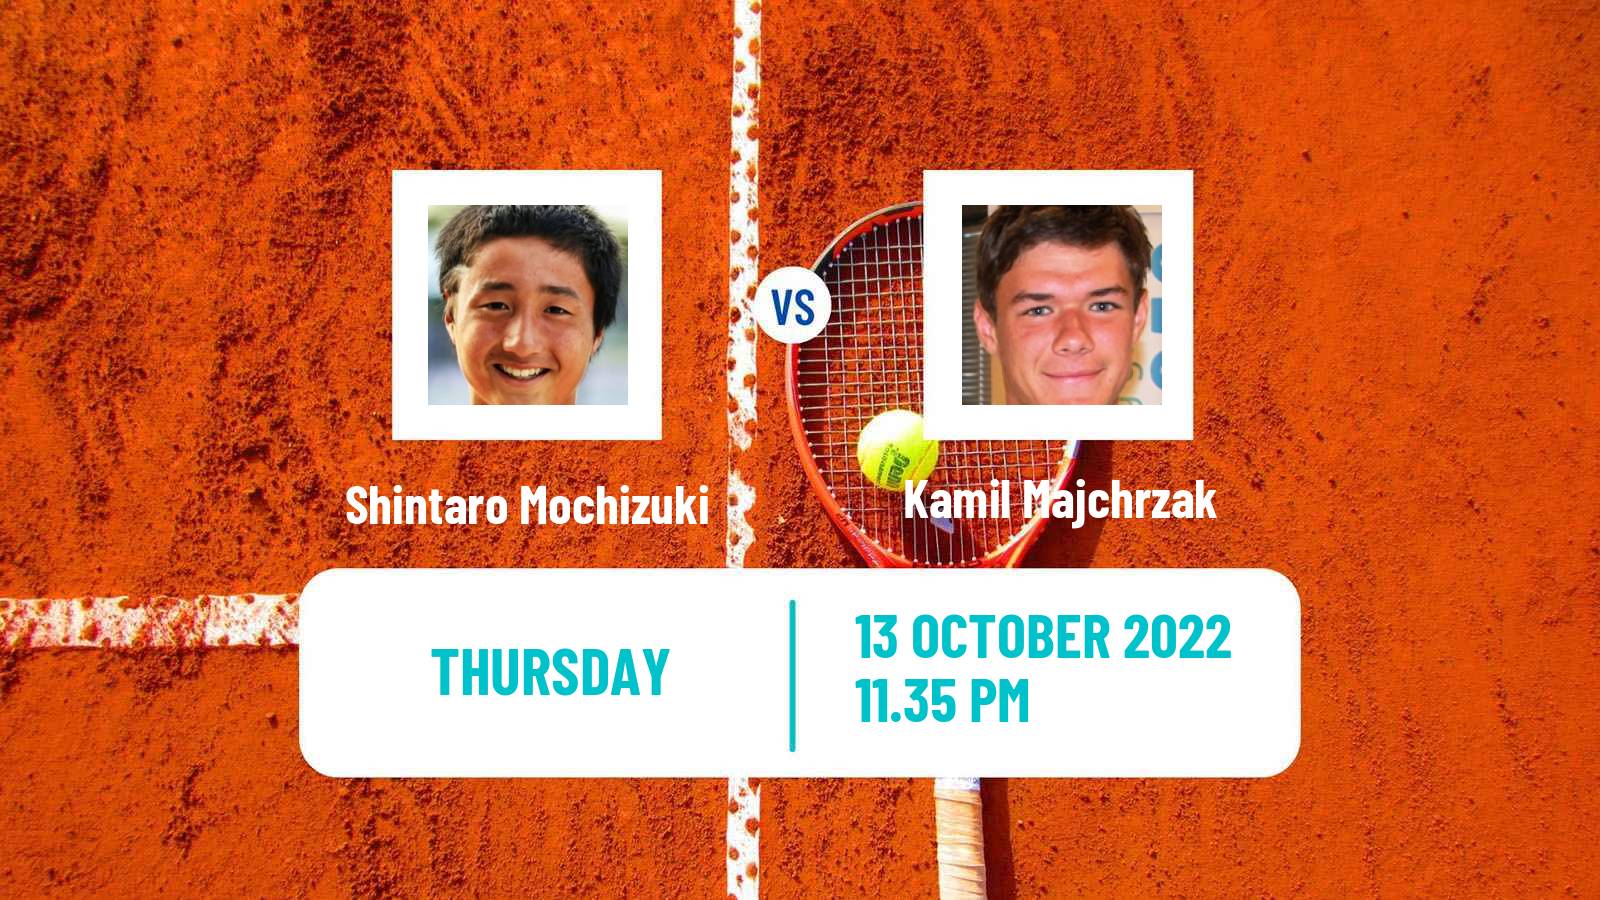 Tennis ATP Challenger Shintaro Mochizuki - Kamil Majchrzak